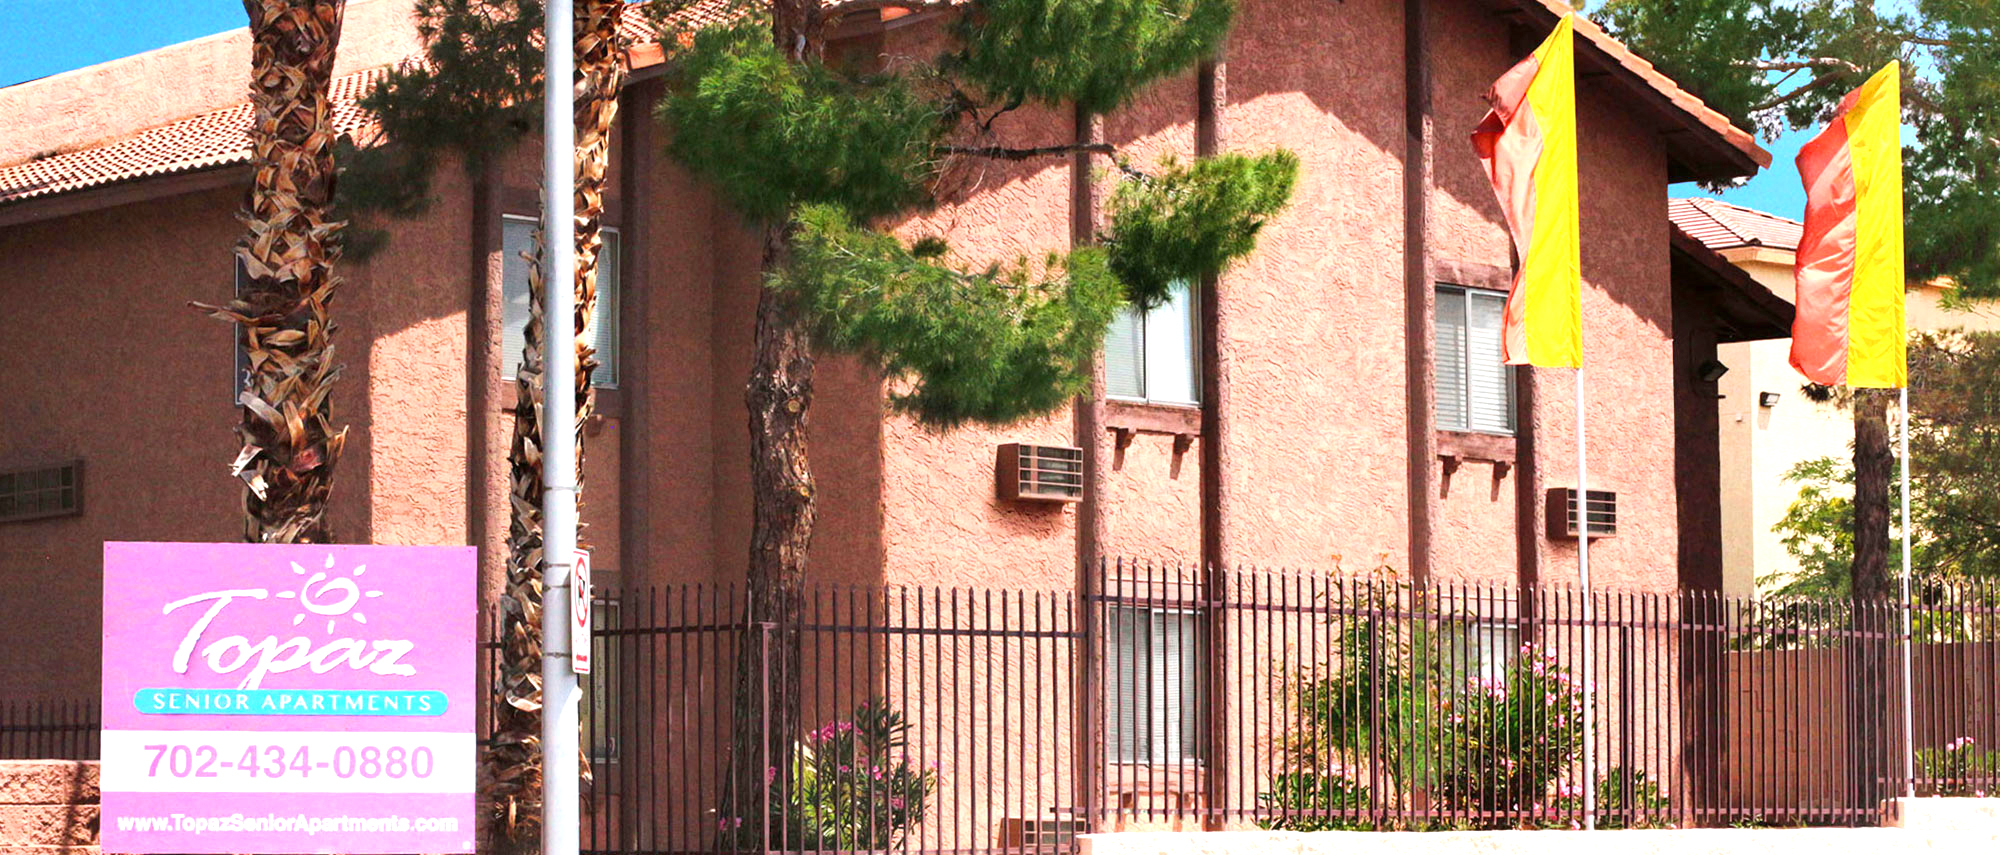 This image shows the exterior of Topaz Senior Apartments